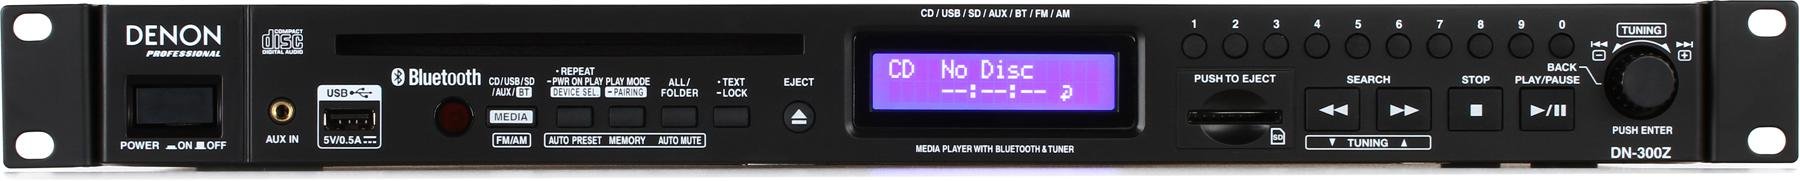 denon dn-300c cd/media player